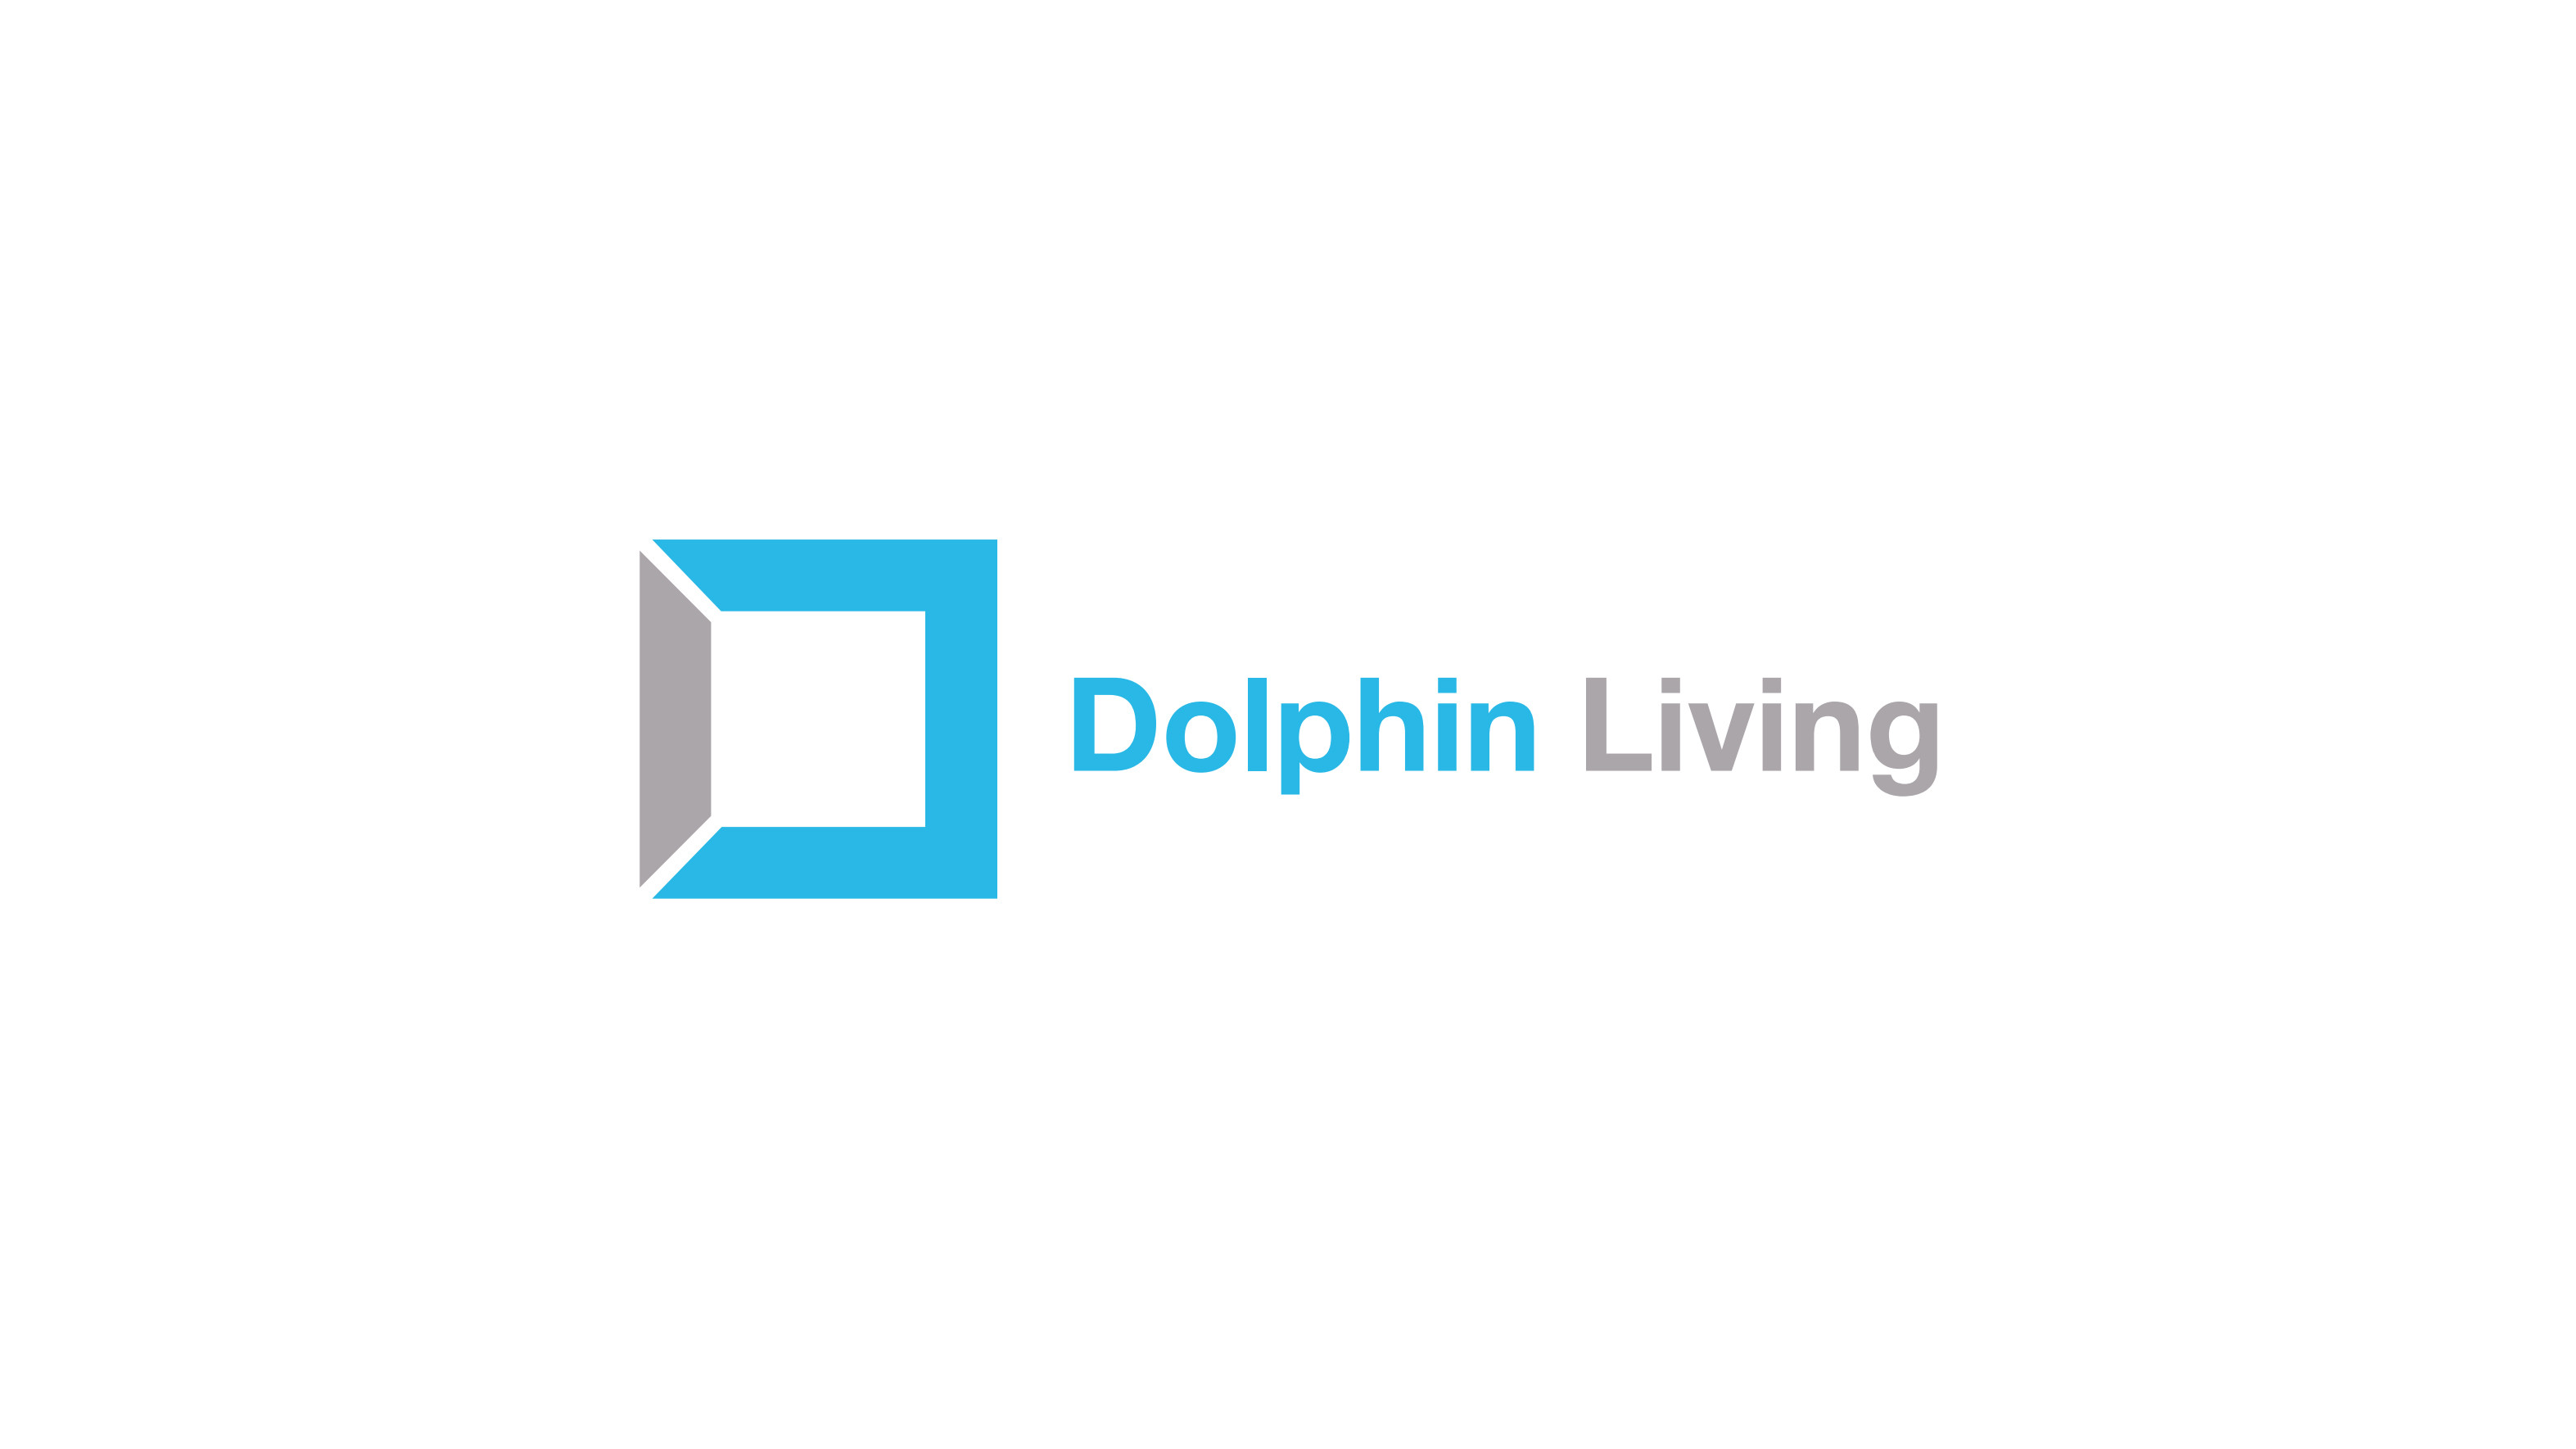 Dolphin Living logo cover